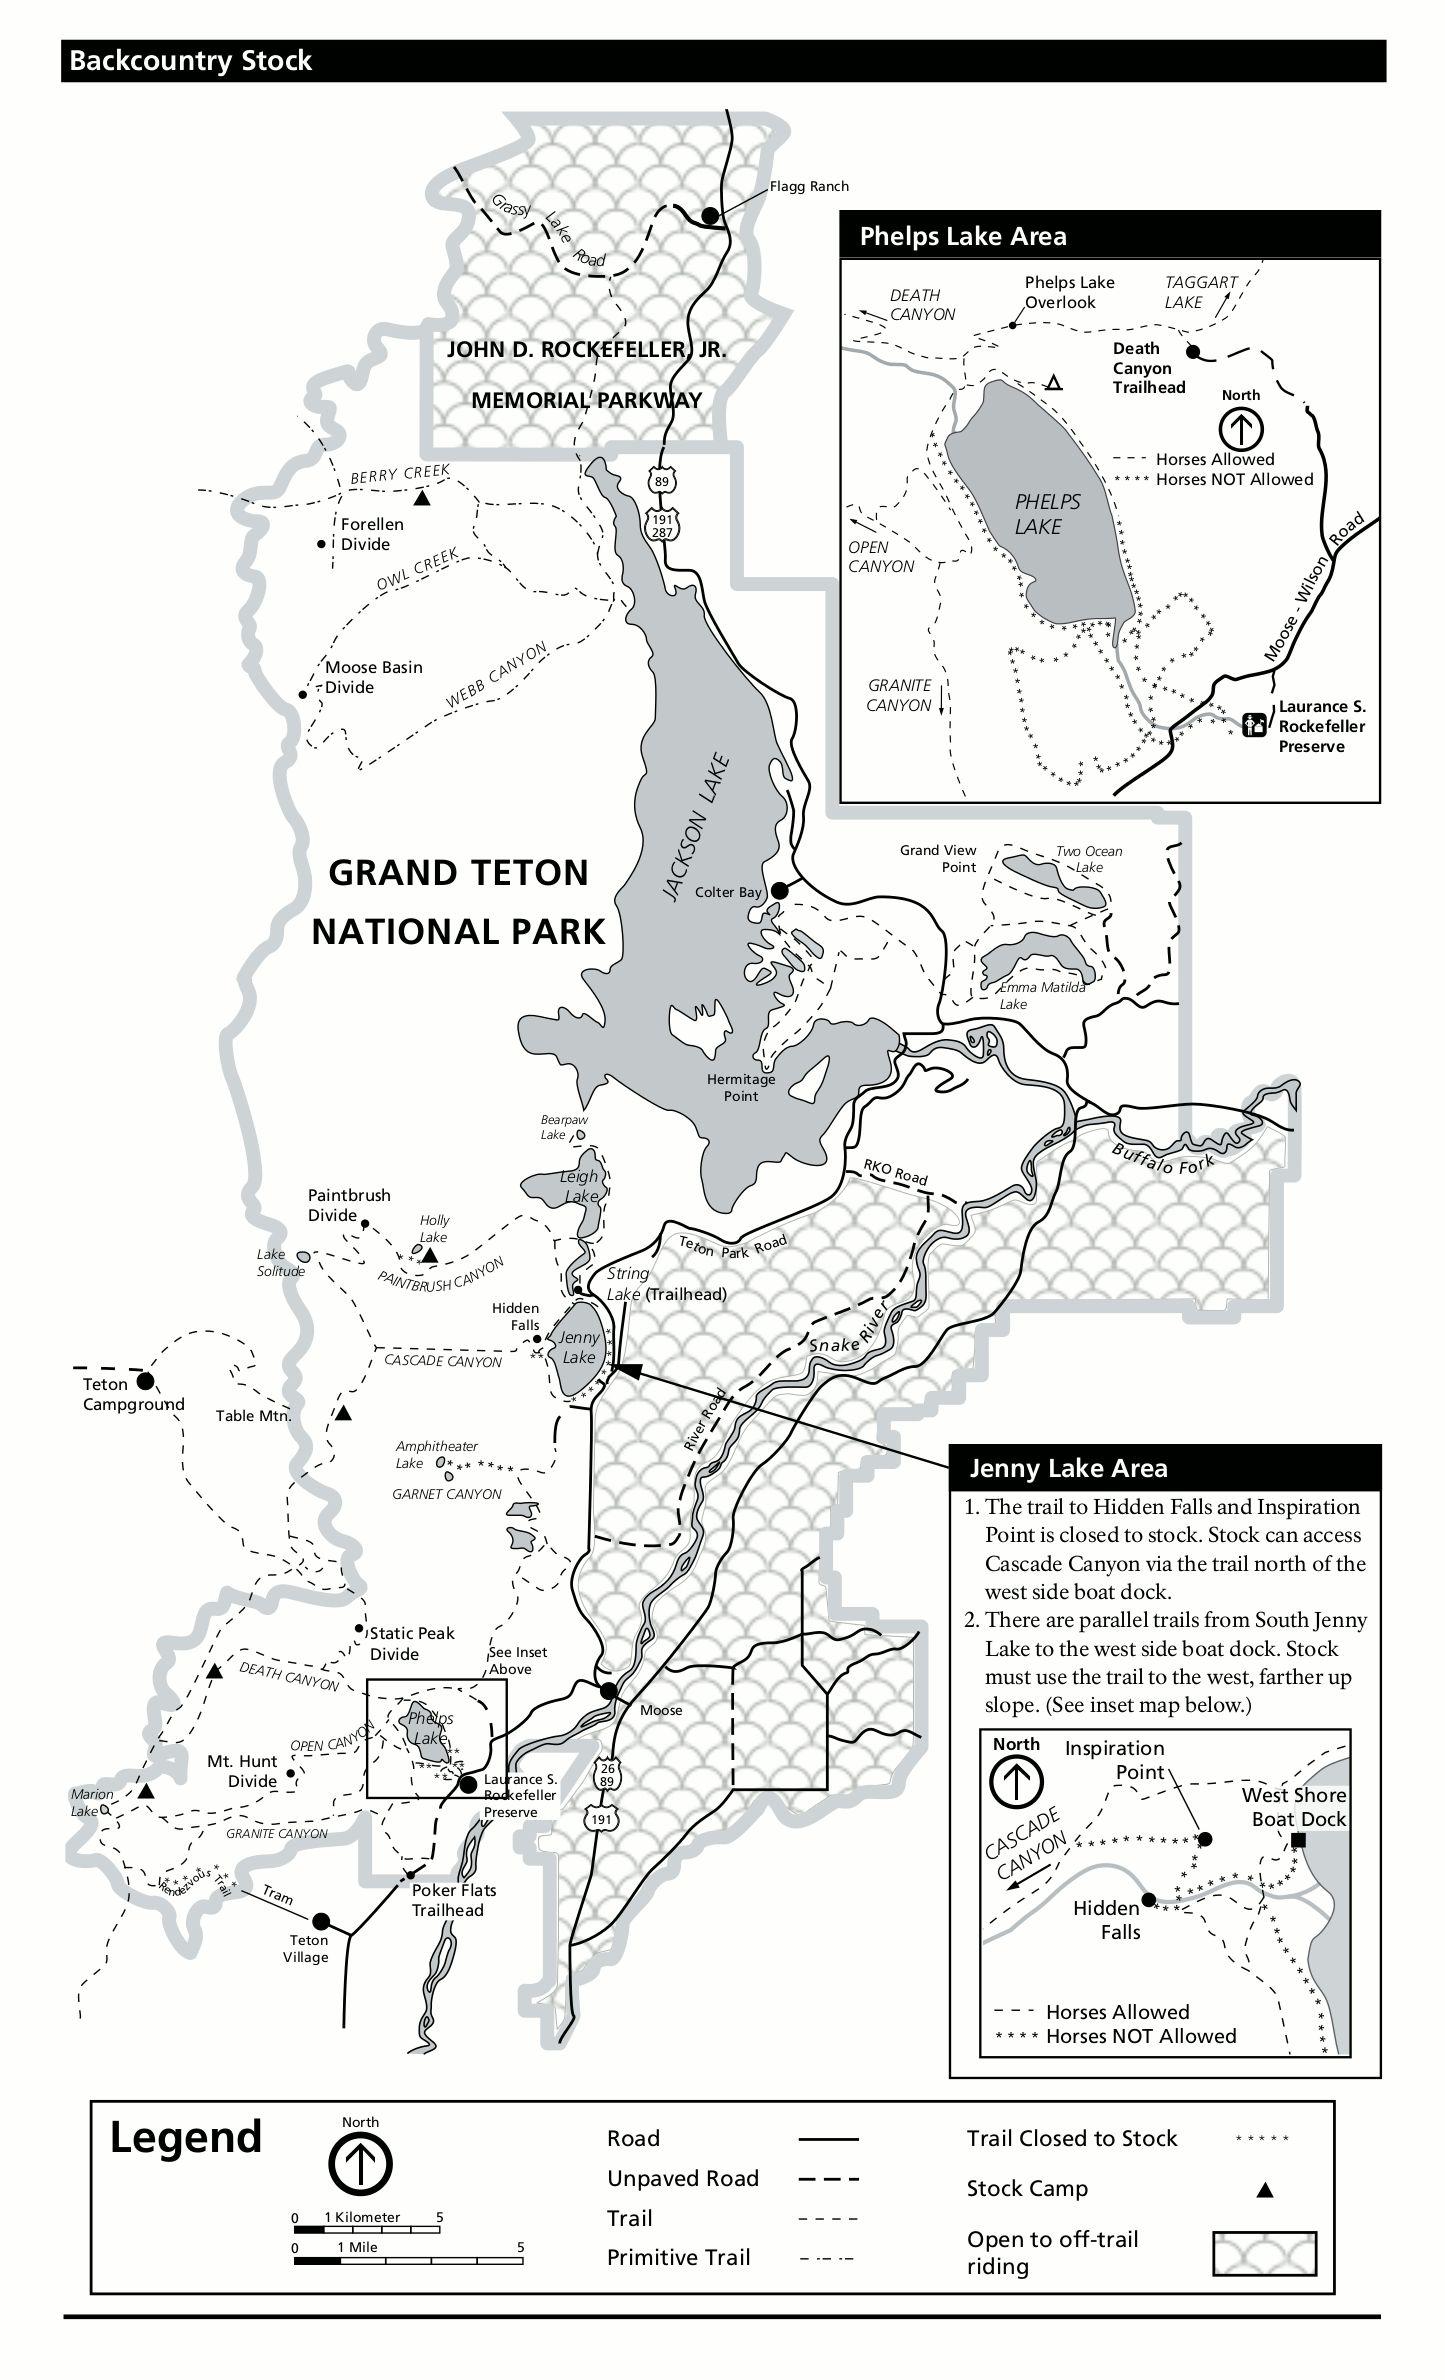 Grand Teton Maps | NPMaps.com - just free maps, period.